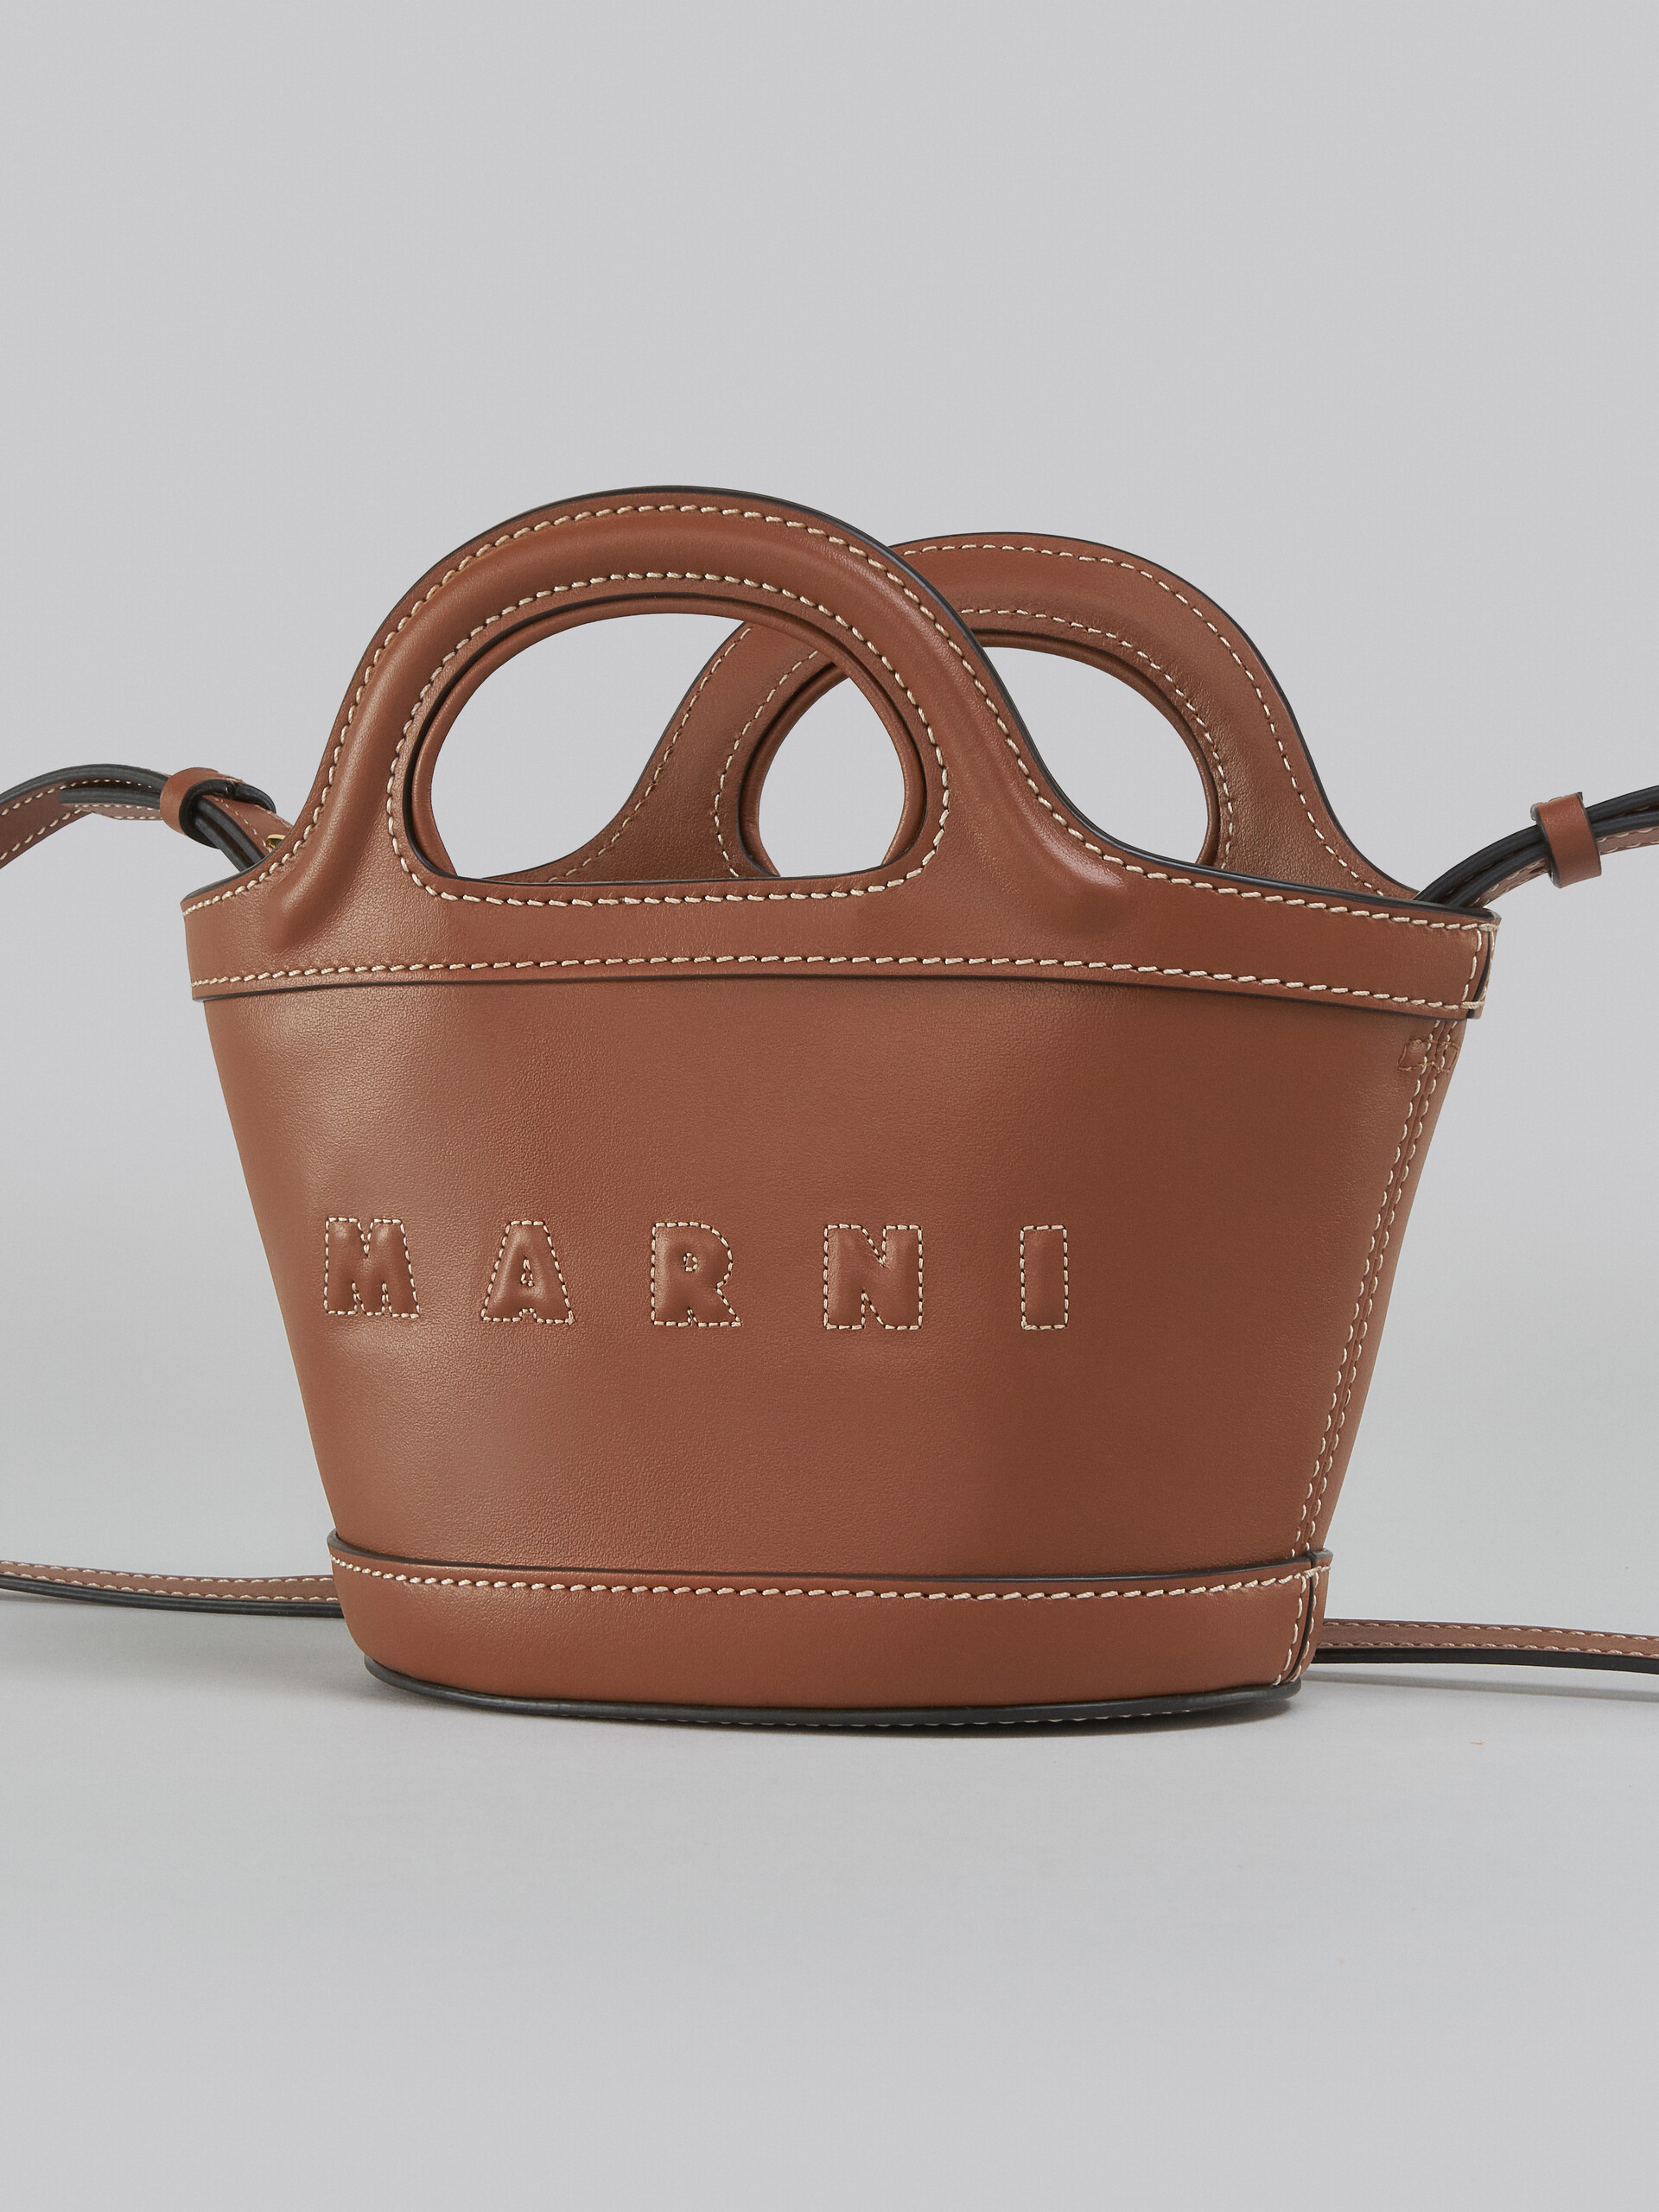 Tropicalia Micro Bag in brown leather - Handbag - Image 5